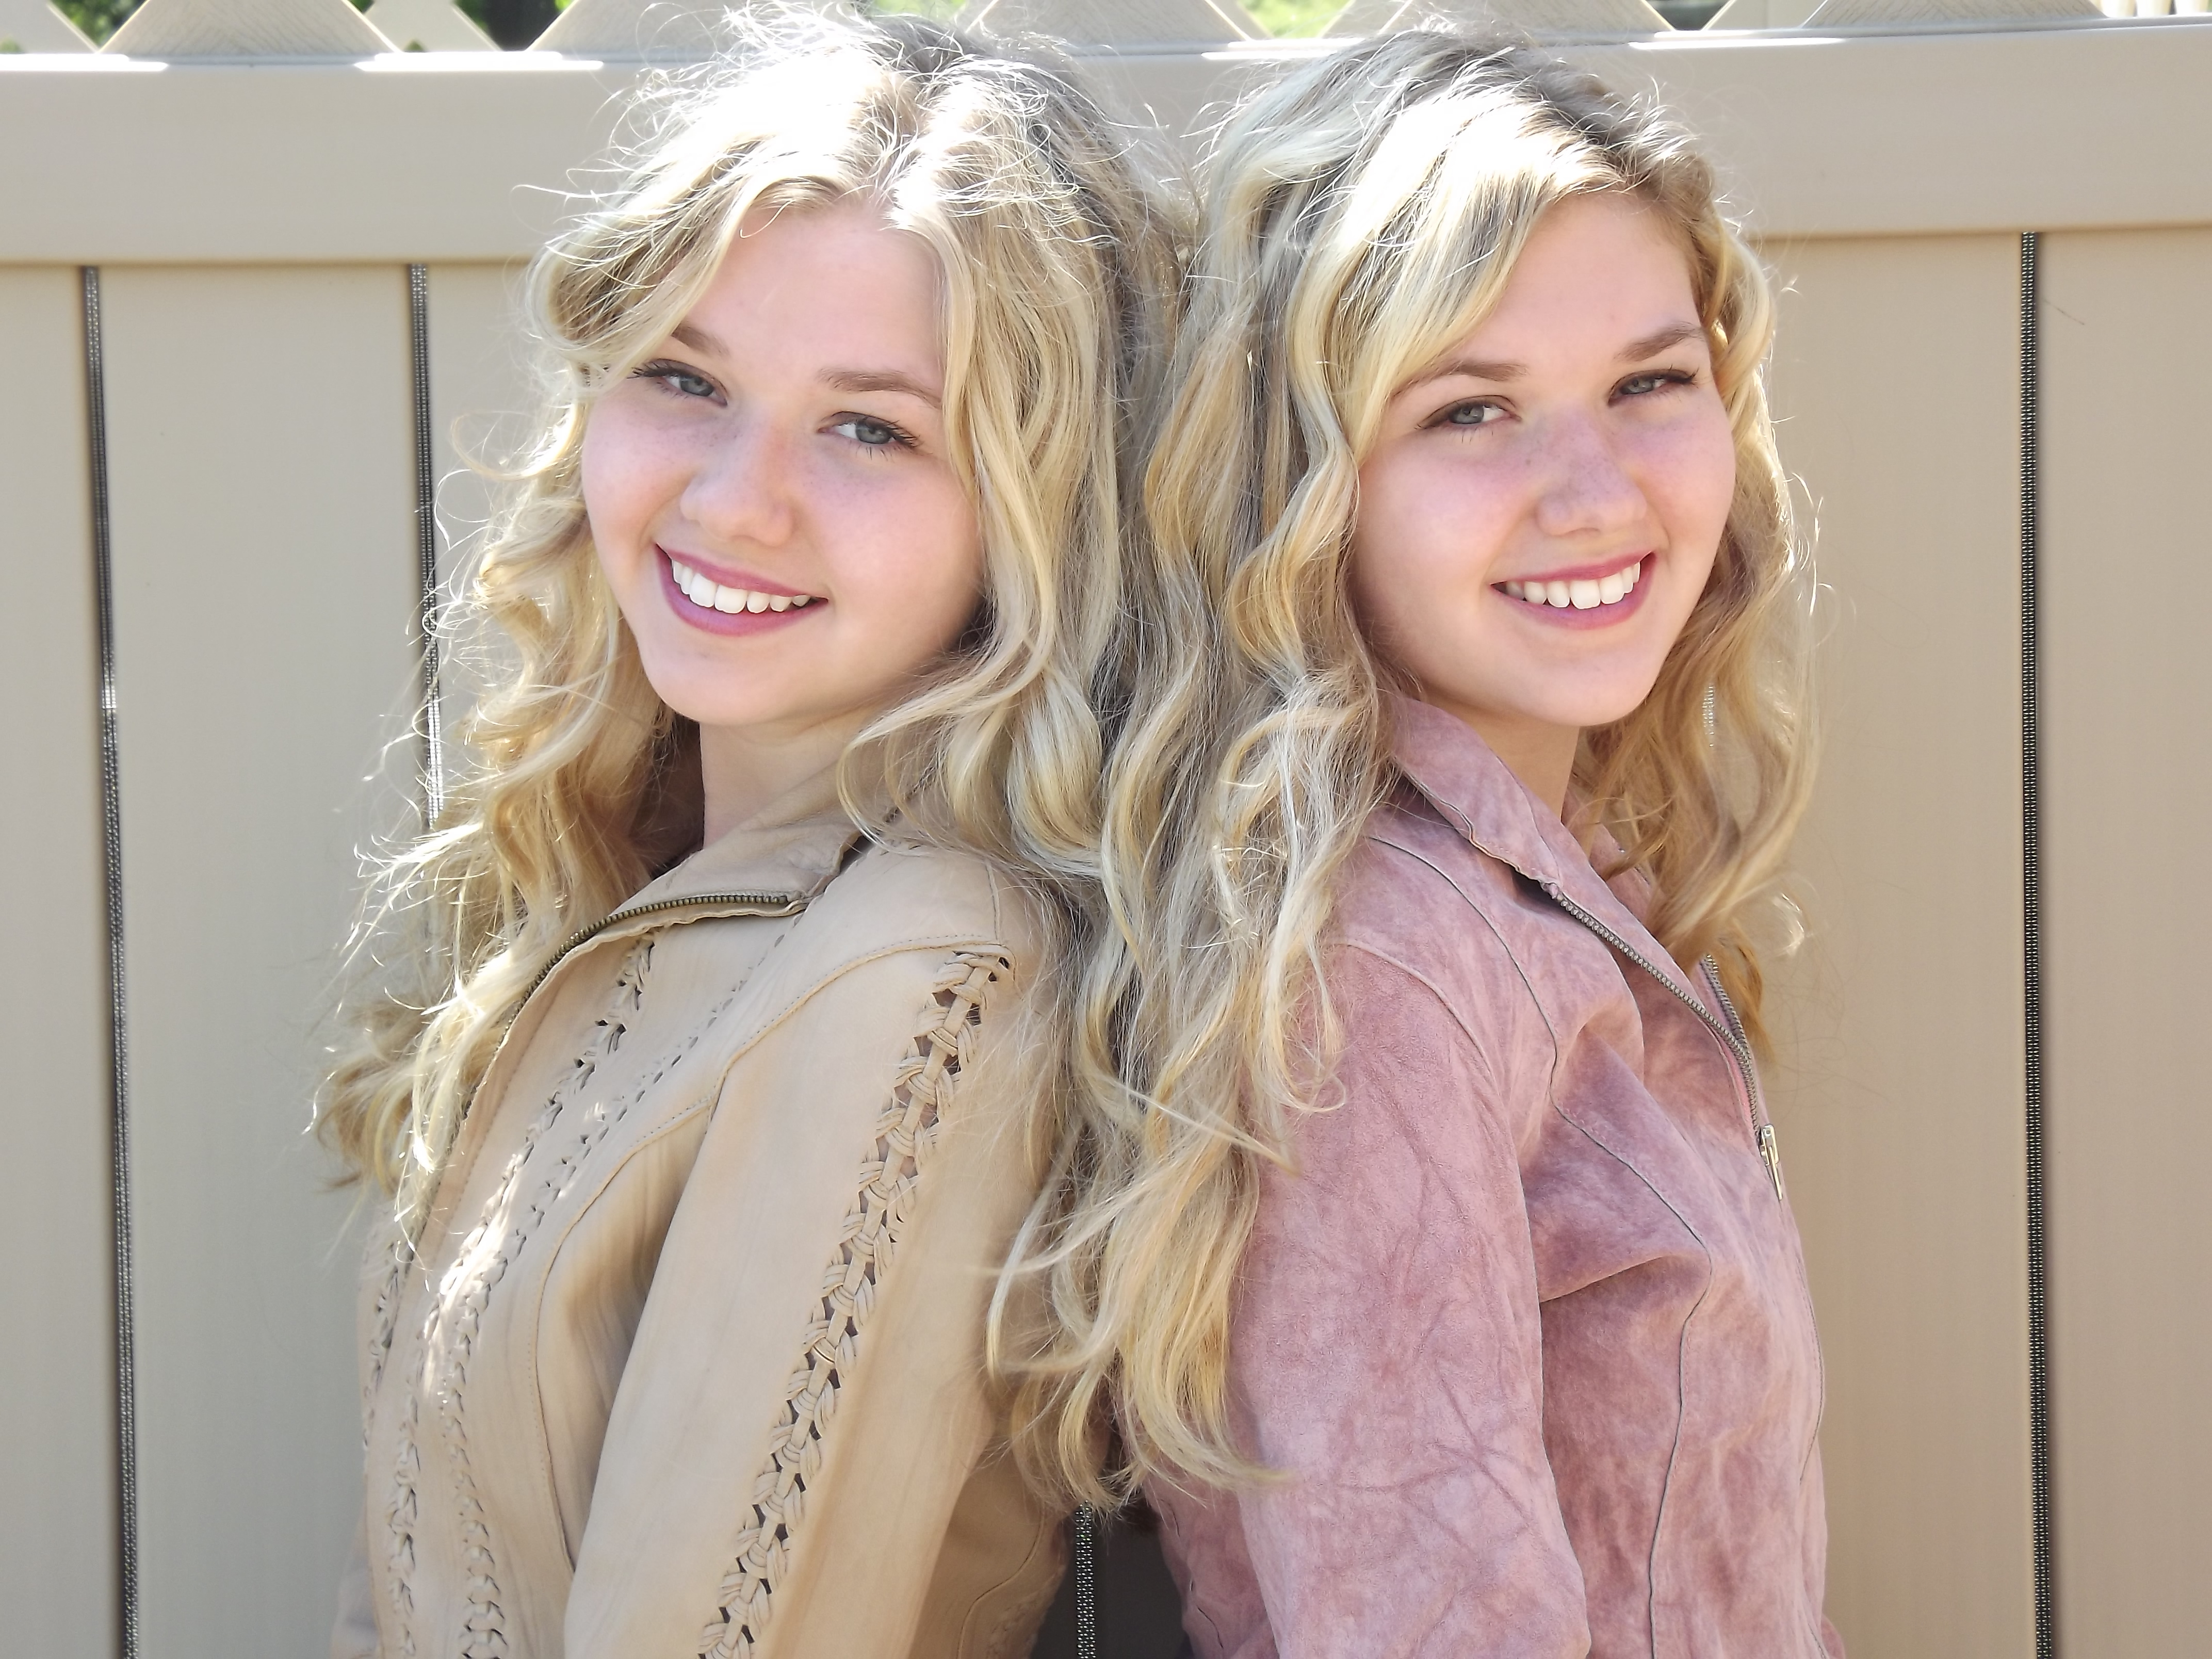 Cailin loesch (left) and twin Hannah Loesch in 2013